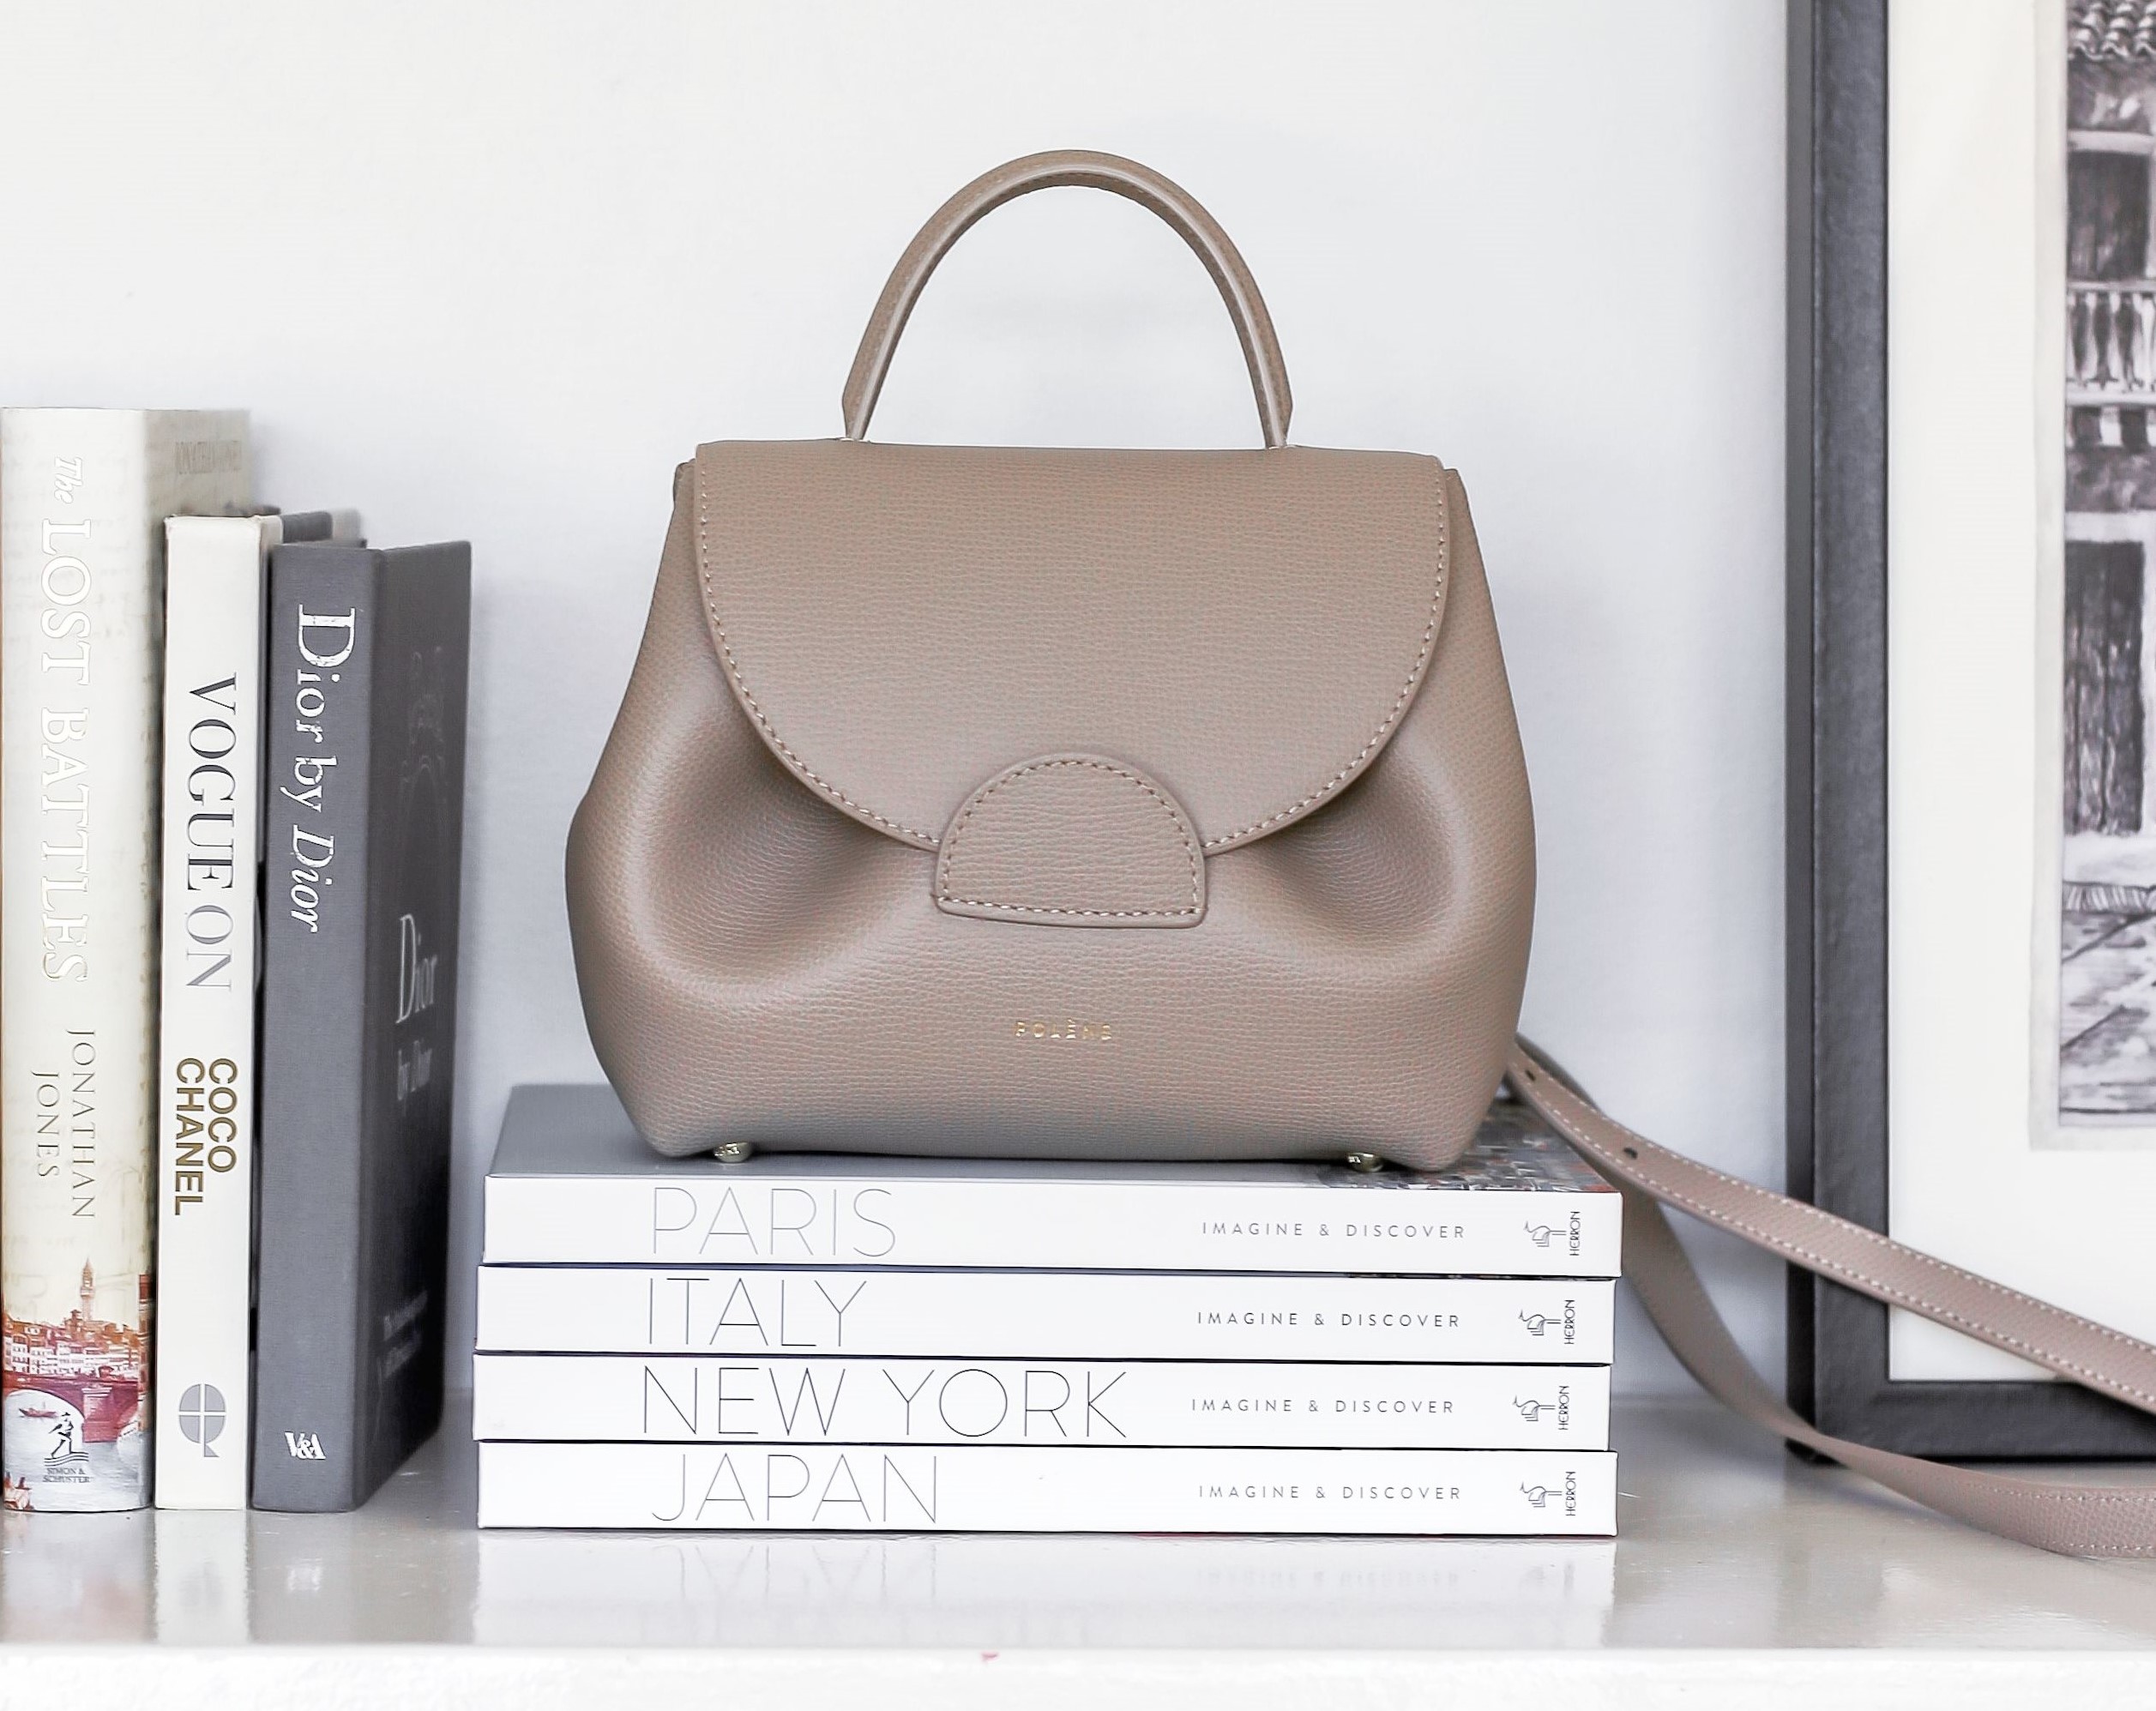 Polene Number One Nano Bag Review - Mademoiselle